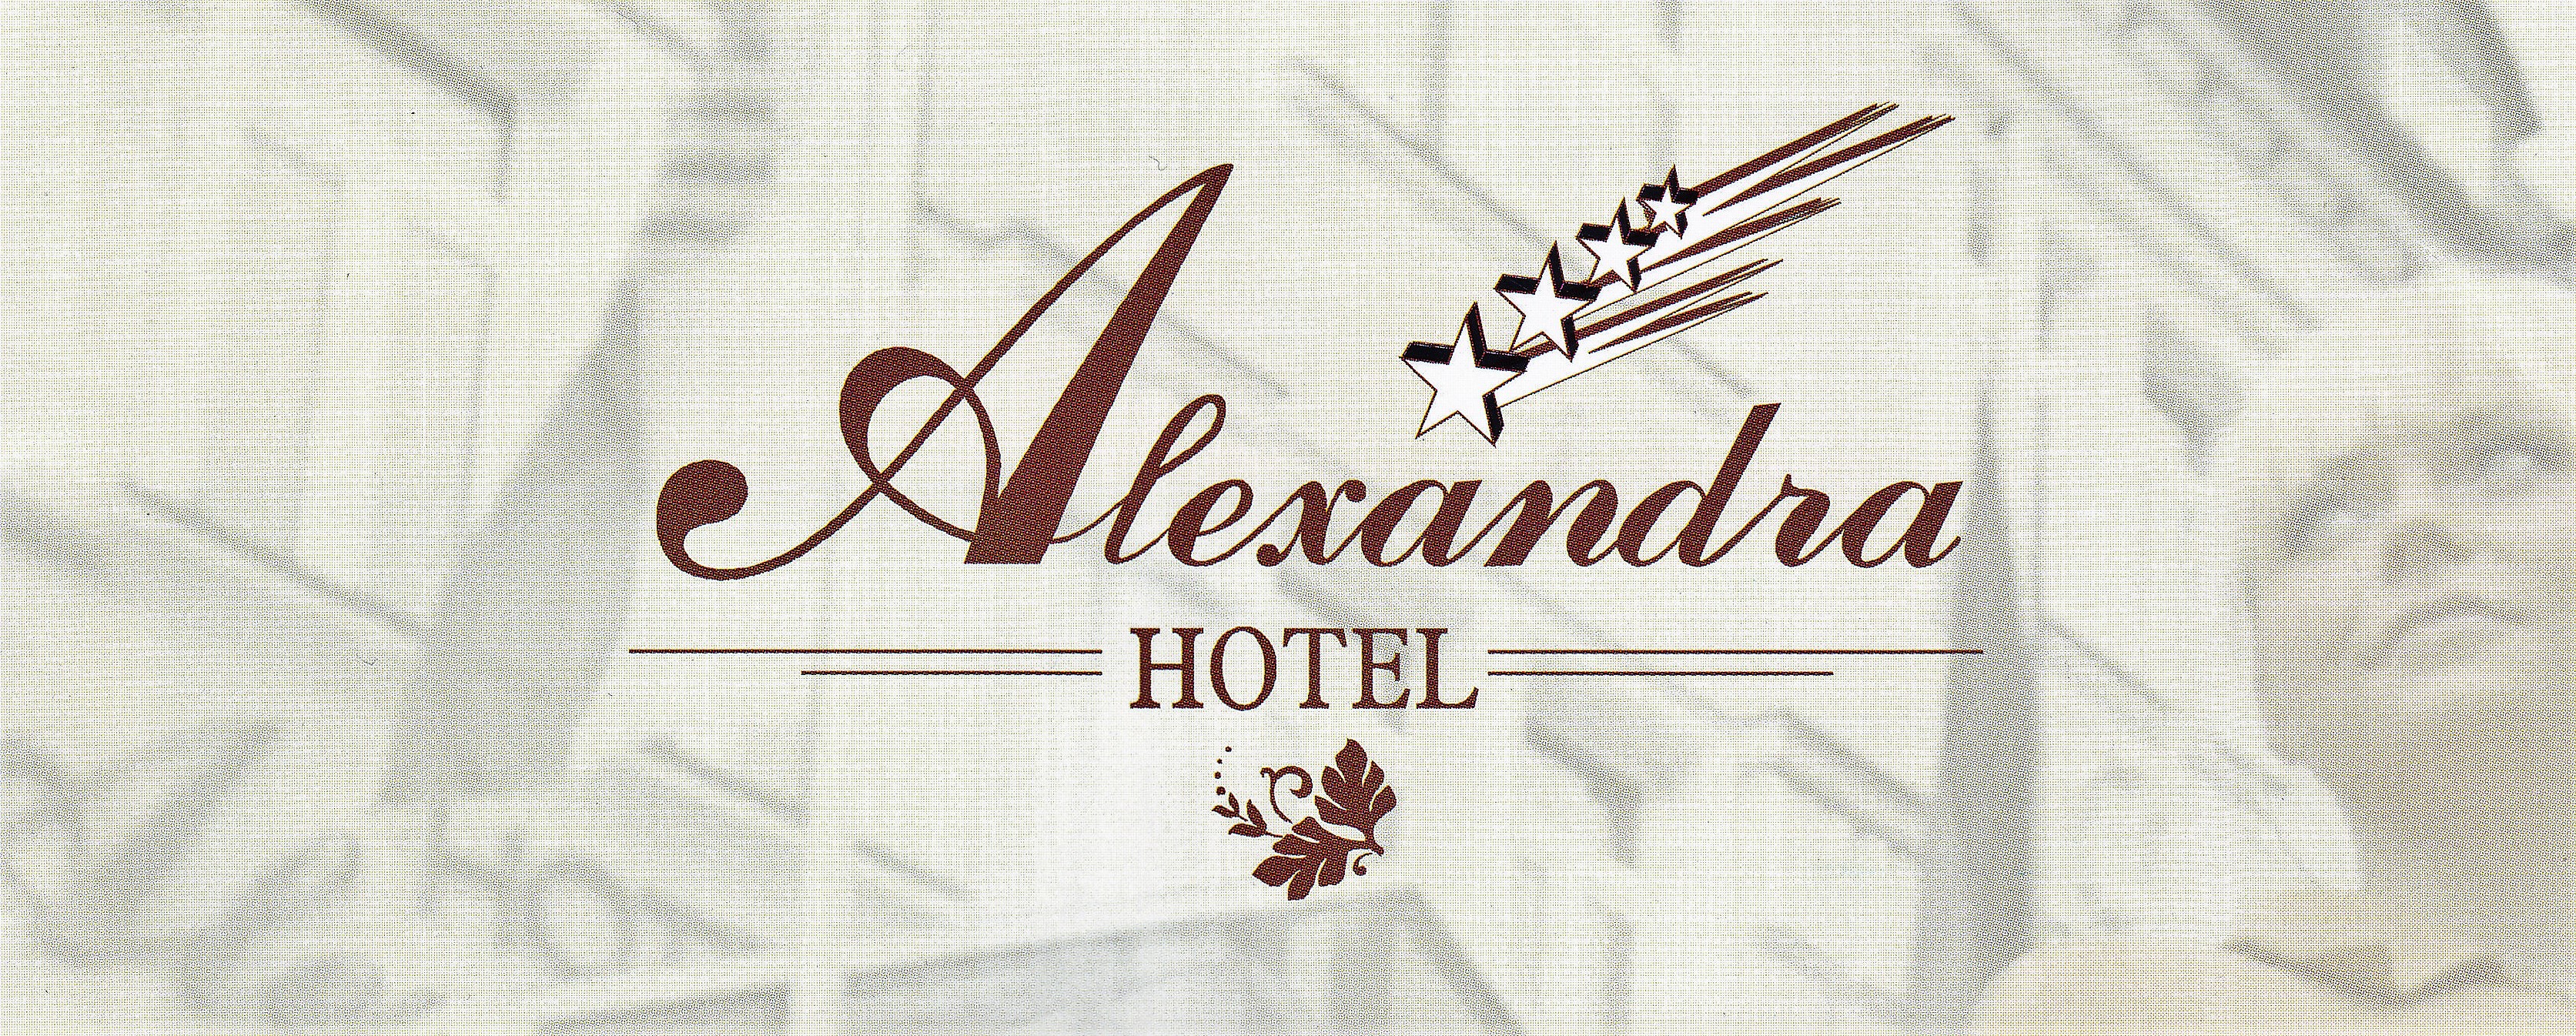 Hotel Alexandra in Plauen